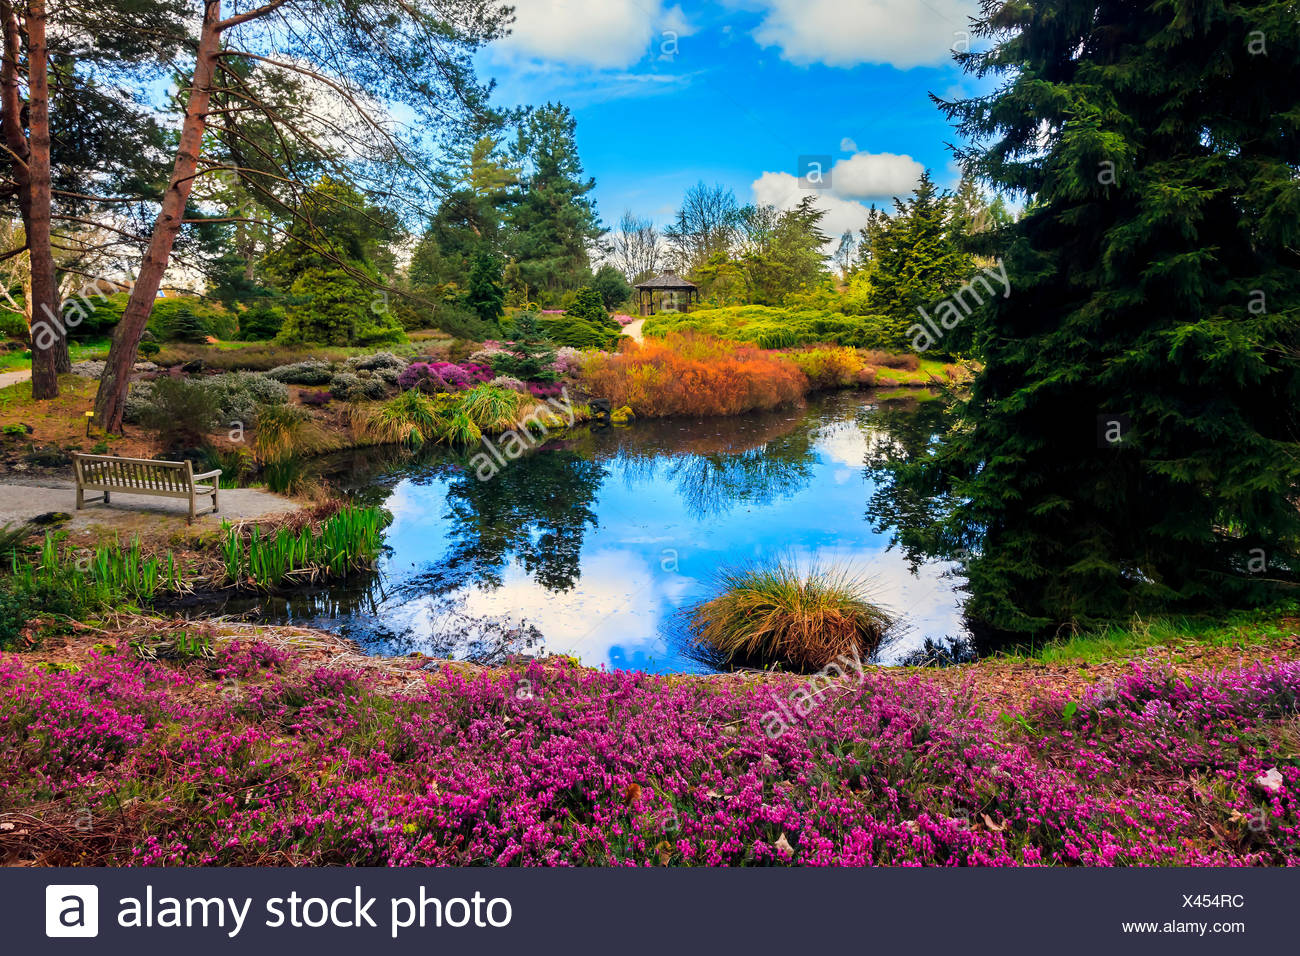 Canada Columbia Britanica Jardines Japoneses Banqueta Estanque Blue Sky Reflexion Jardines Flores Flores Rosas Arboles Fotografia De Stock Alamy